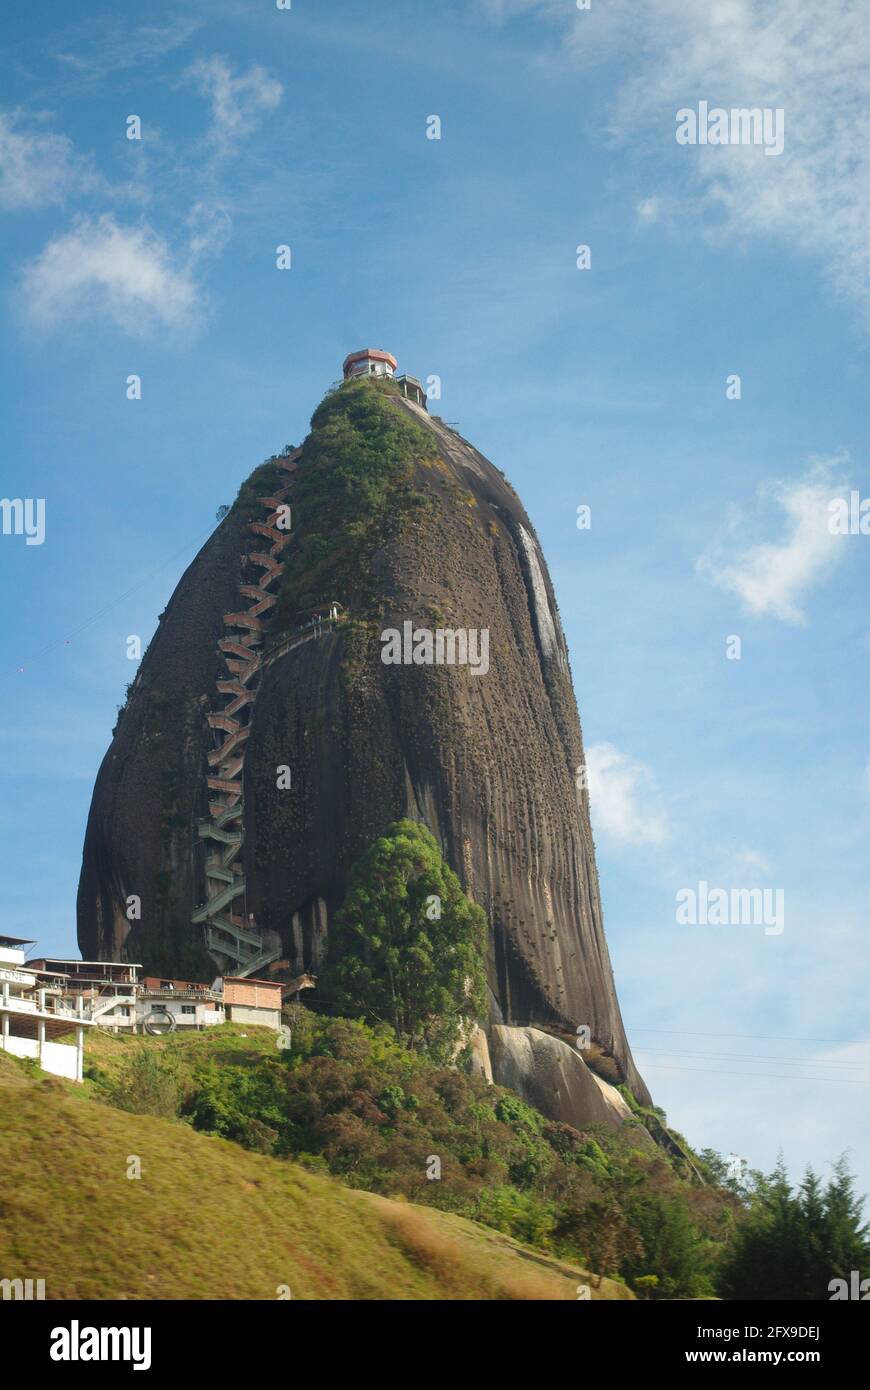 Zig-zag staircase mounting the 200 meter high granite rock formation, El Penon de Guatape, Guatape, Colombia Stock Photo